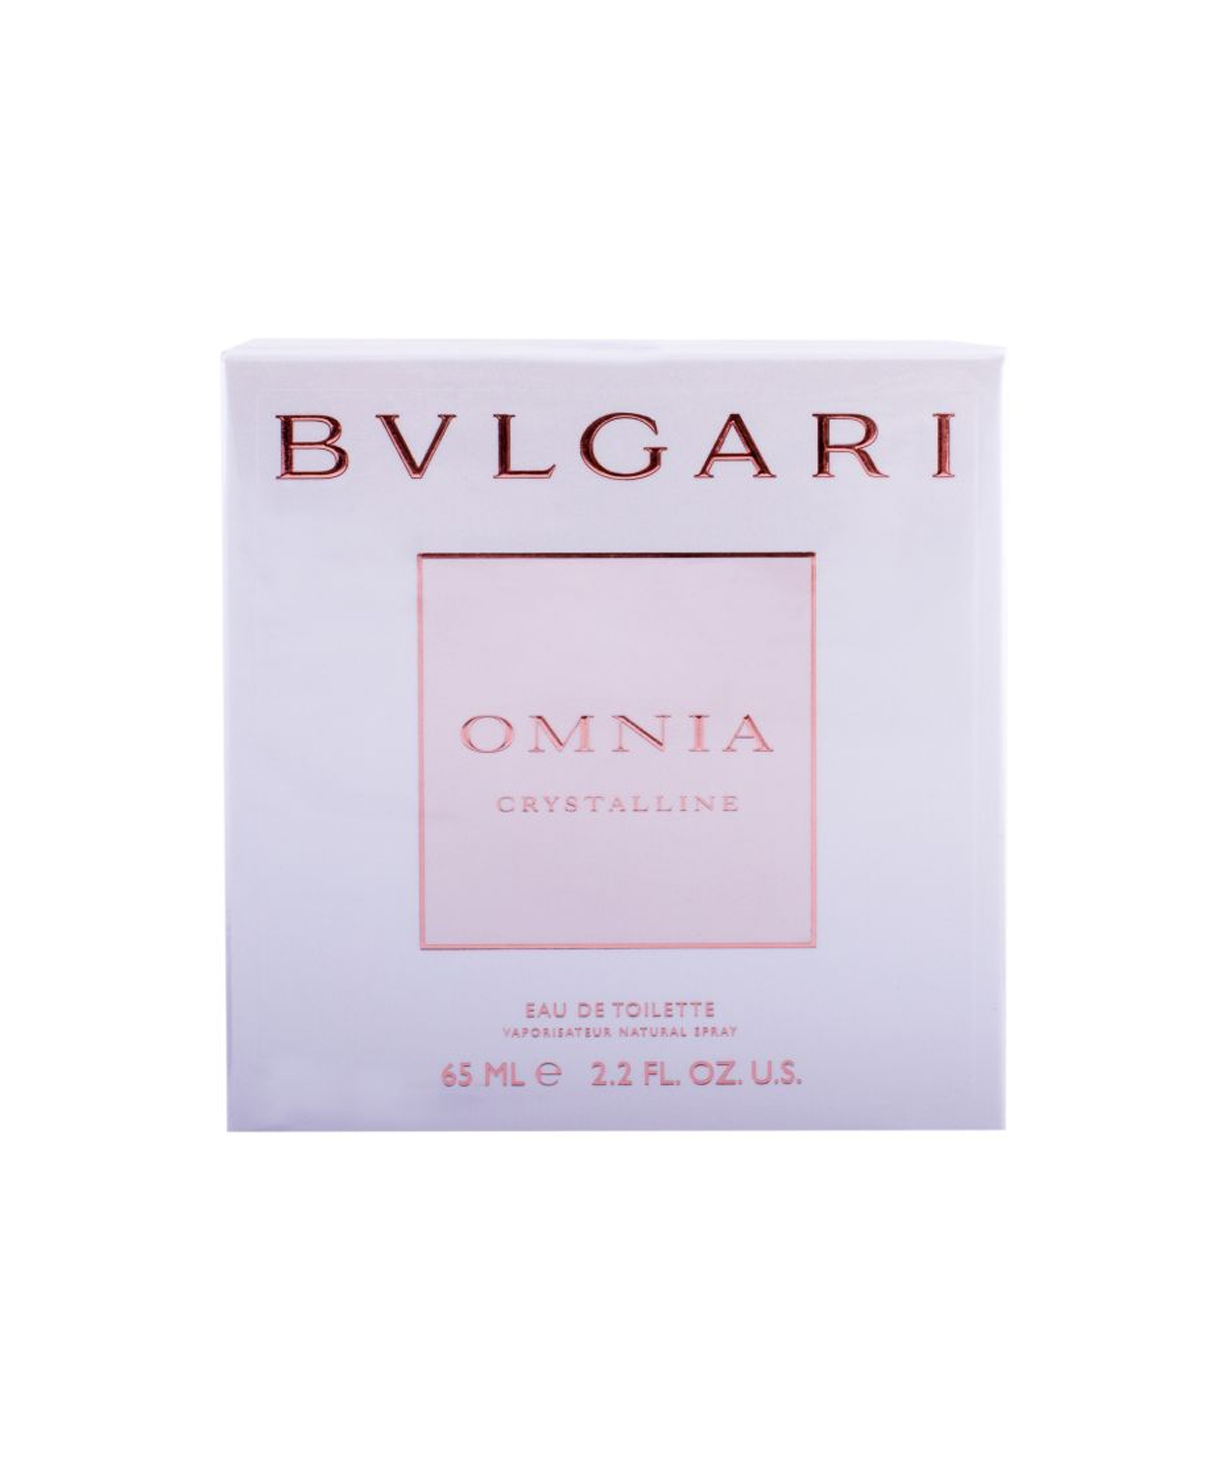 Perfume «Bvlgari» Omnia Crystalline, for women, 65 ml